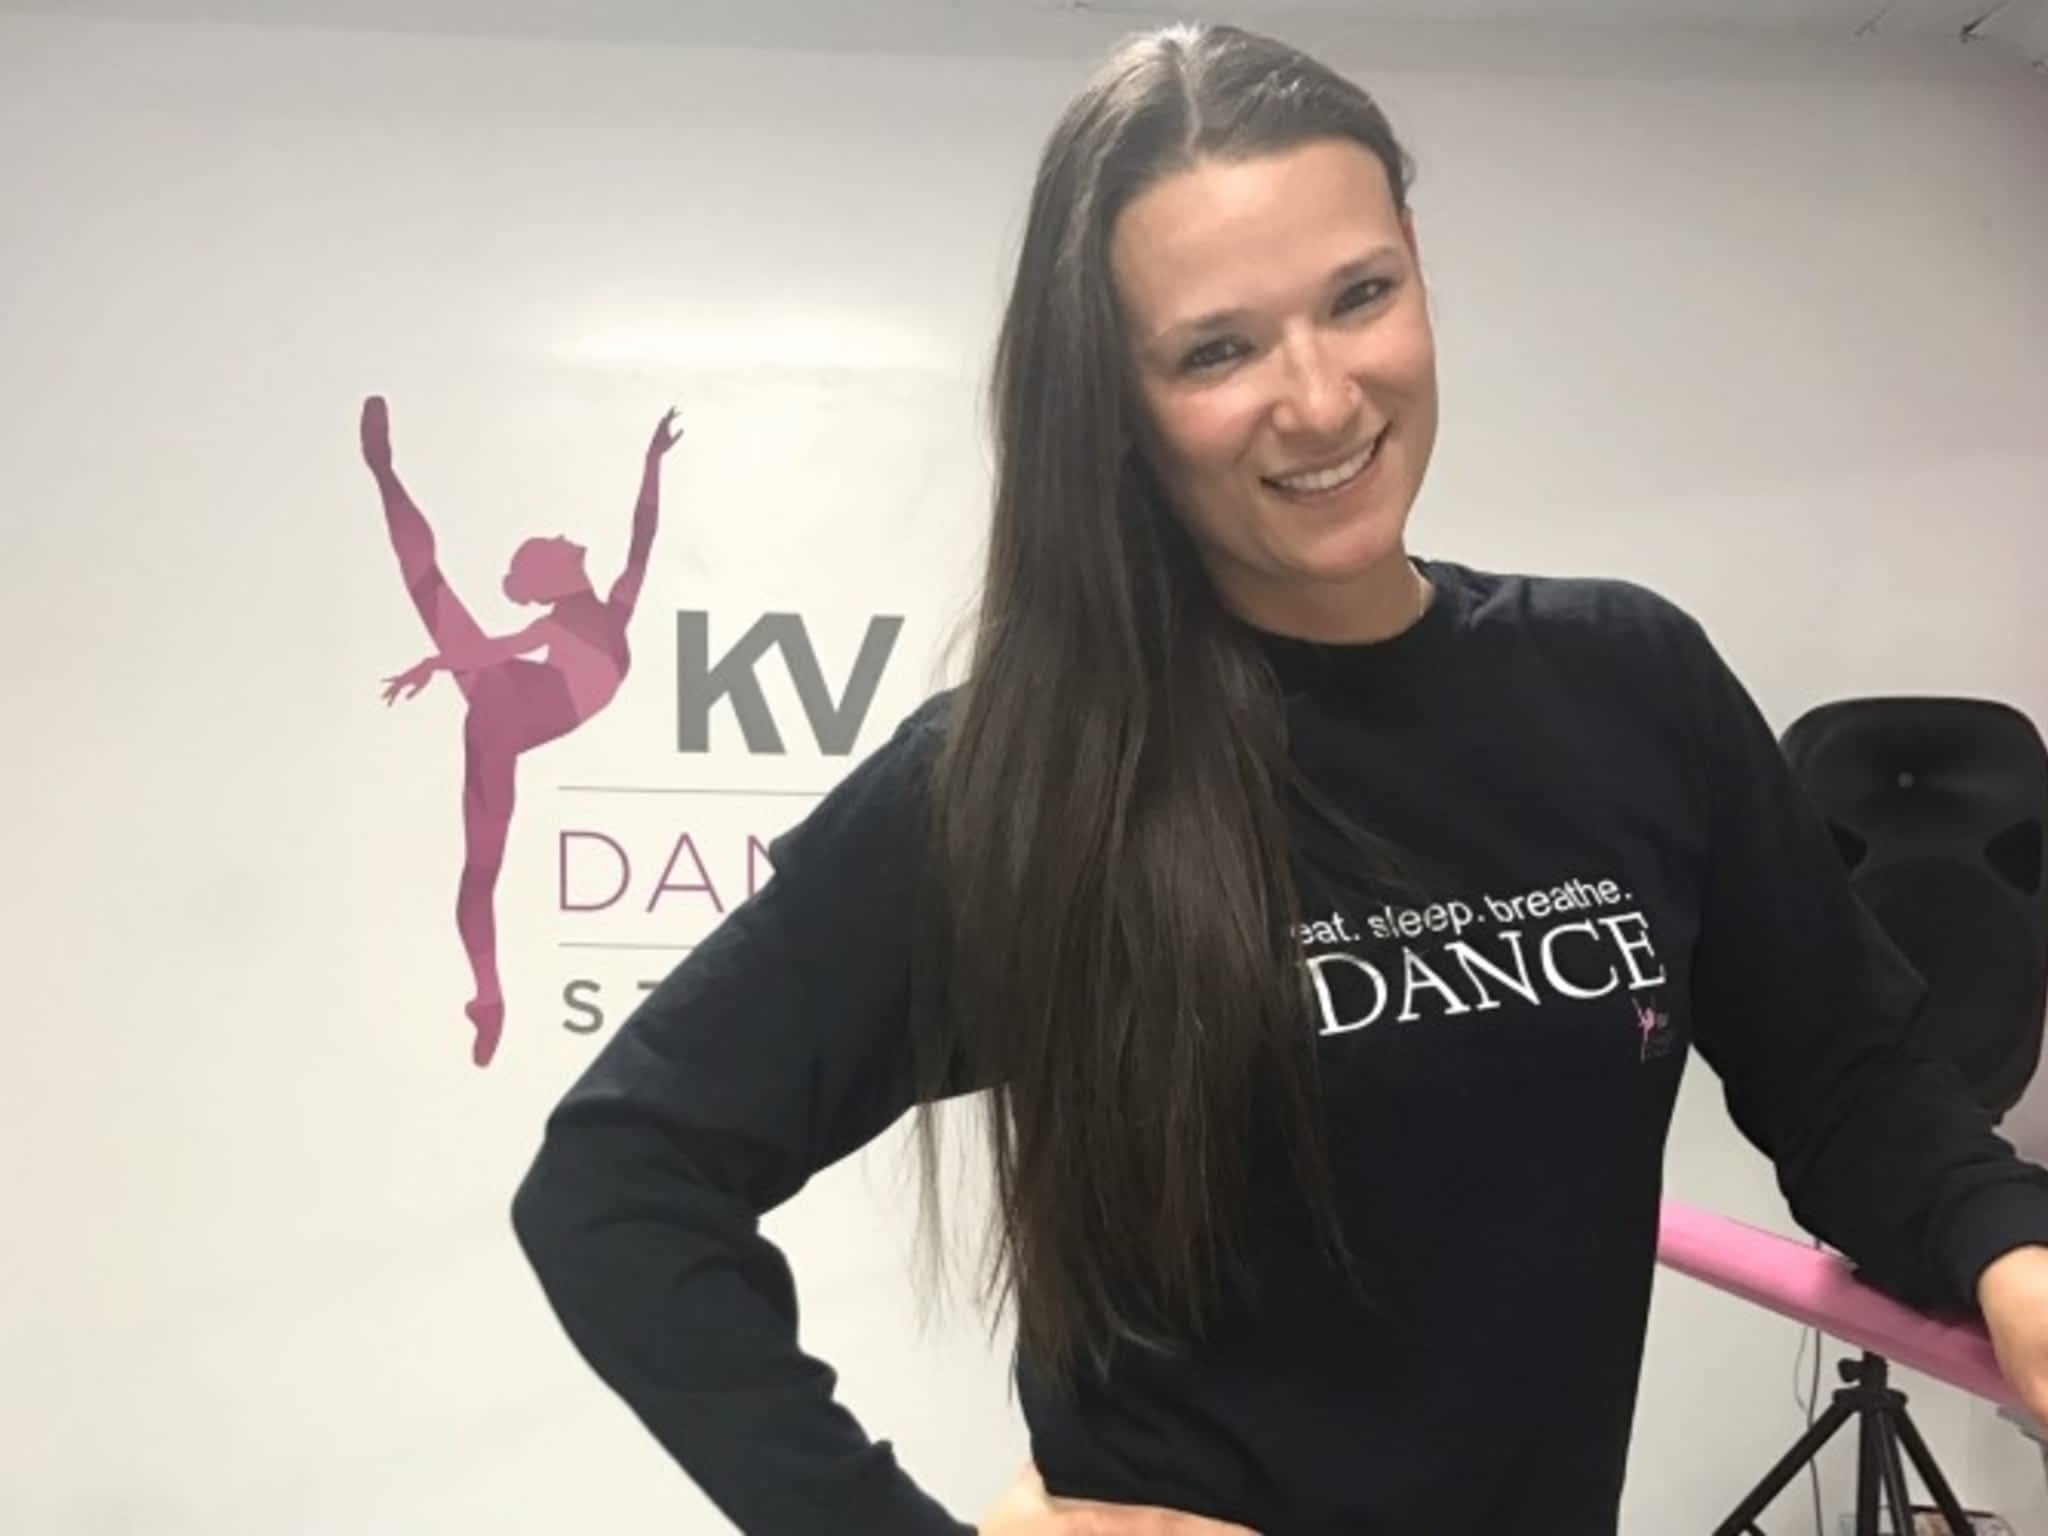 photo Kv Dance Studio